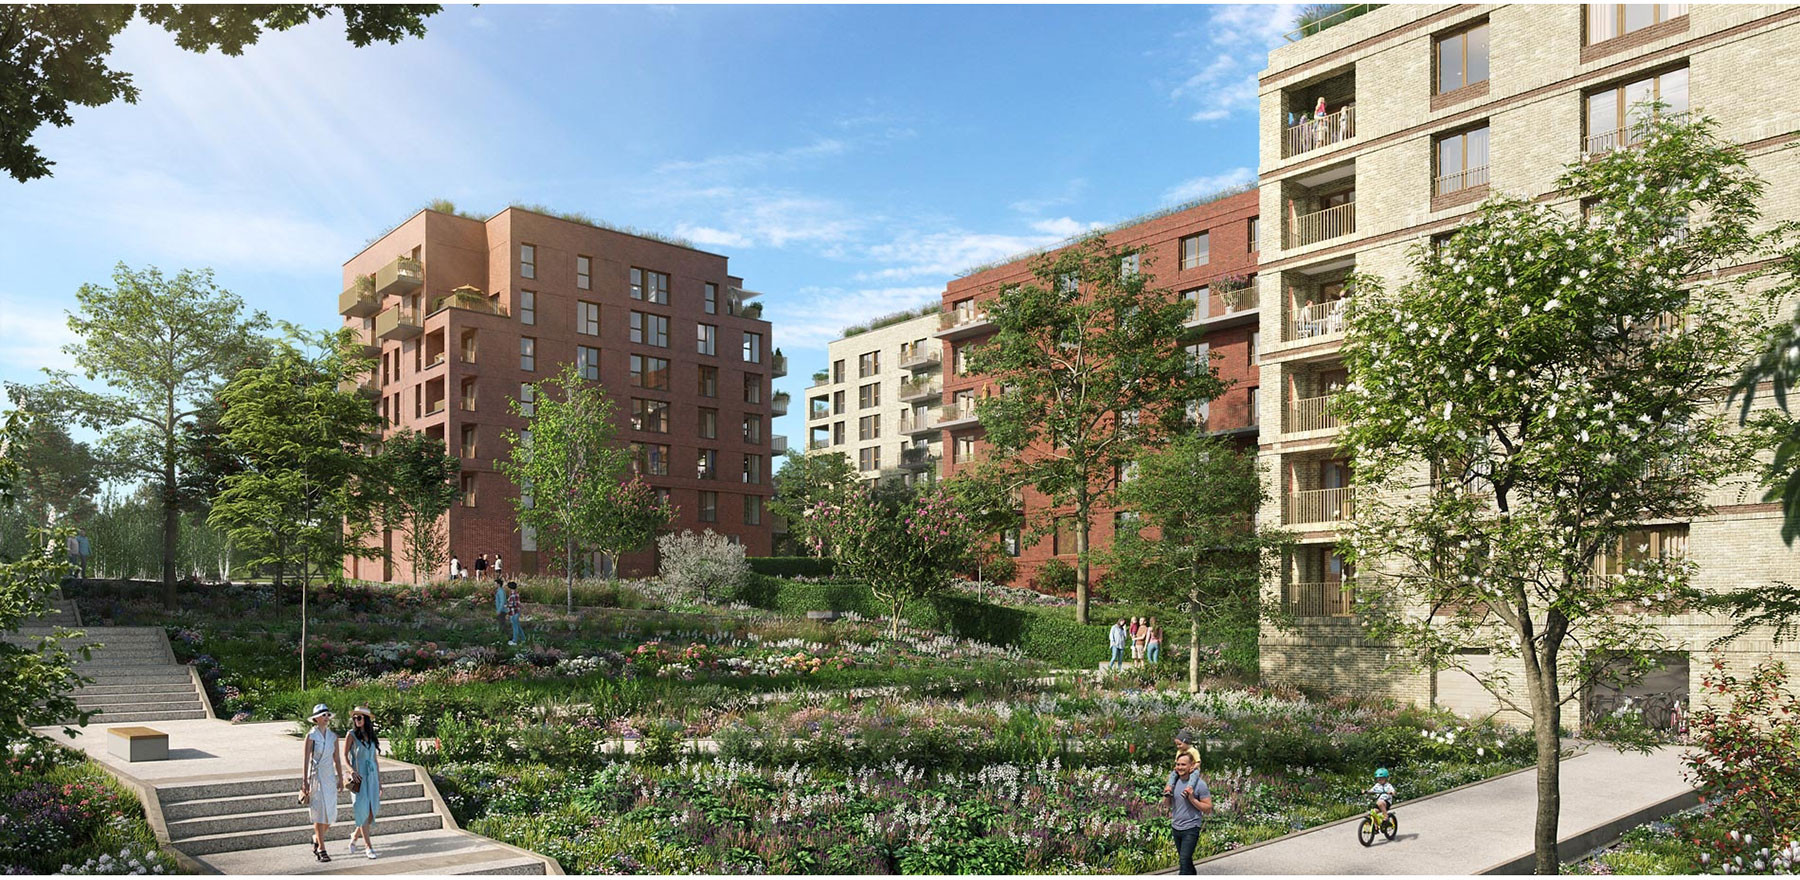 Le plan des appartements de Jardin Manifesto Dugny